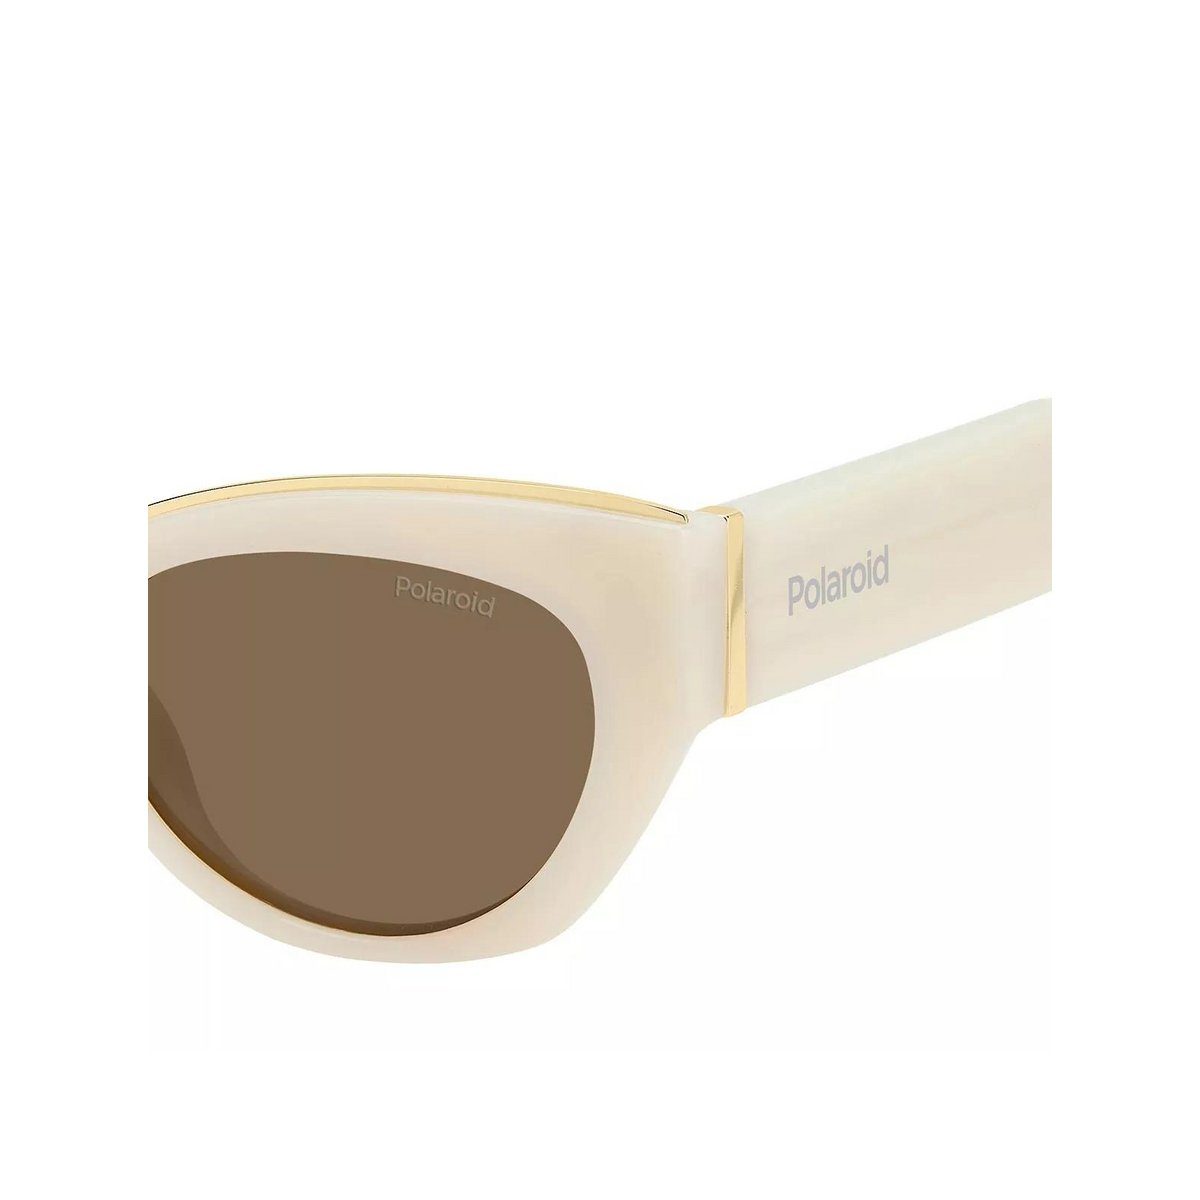 Polaroid (1-St) taupe Sonnenbrille